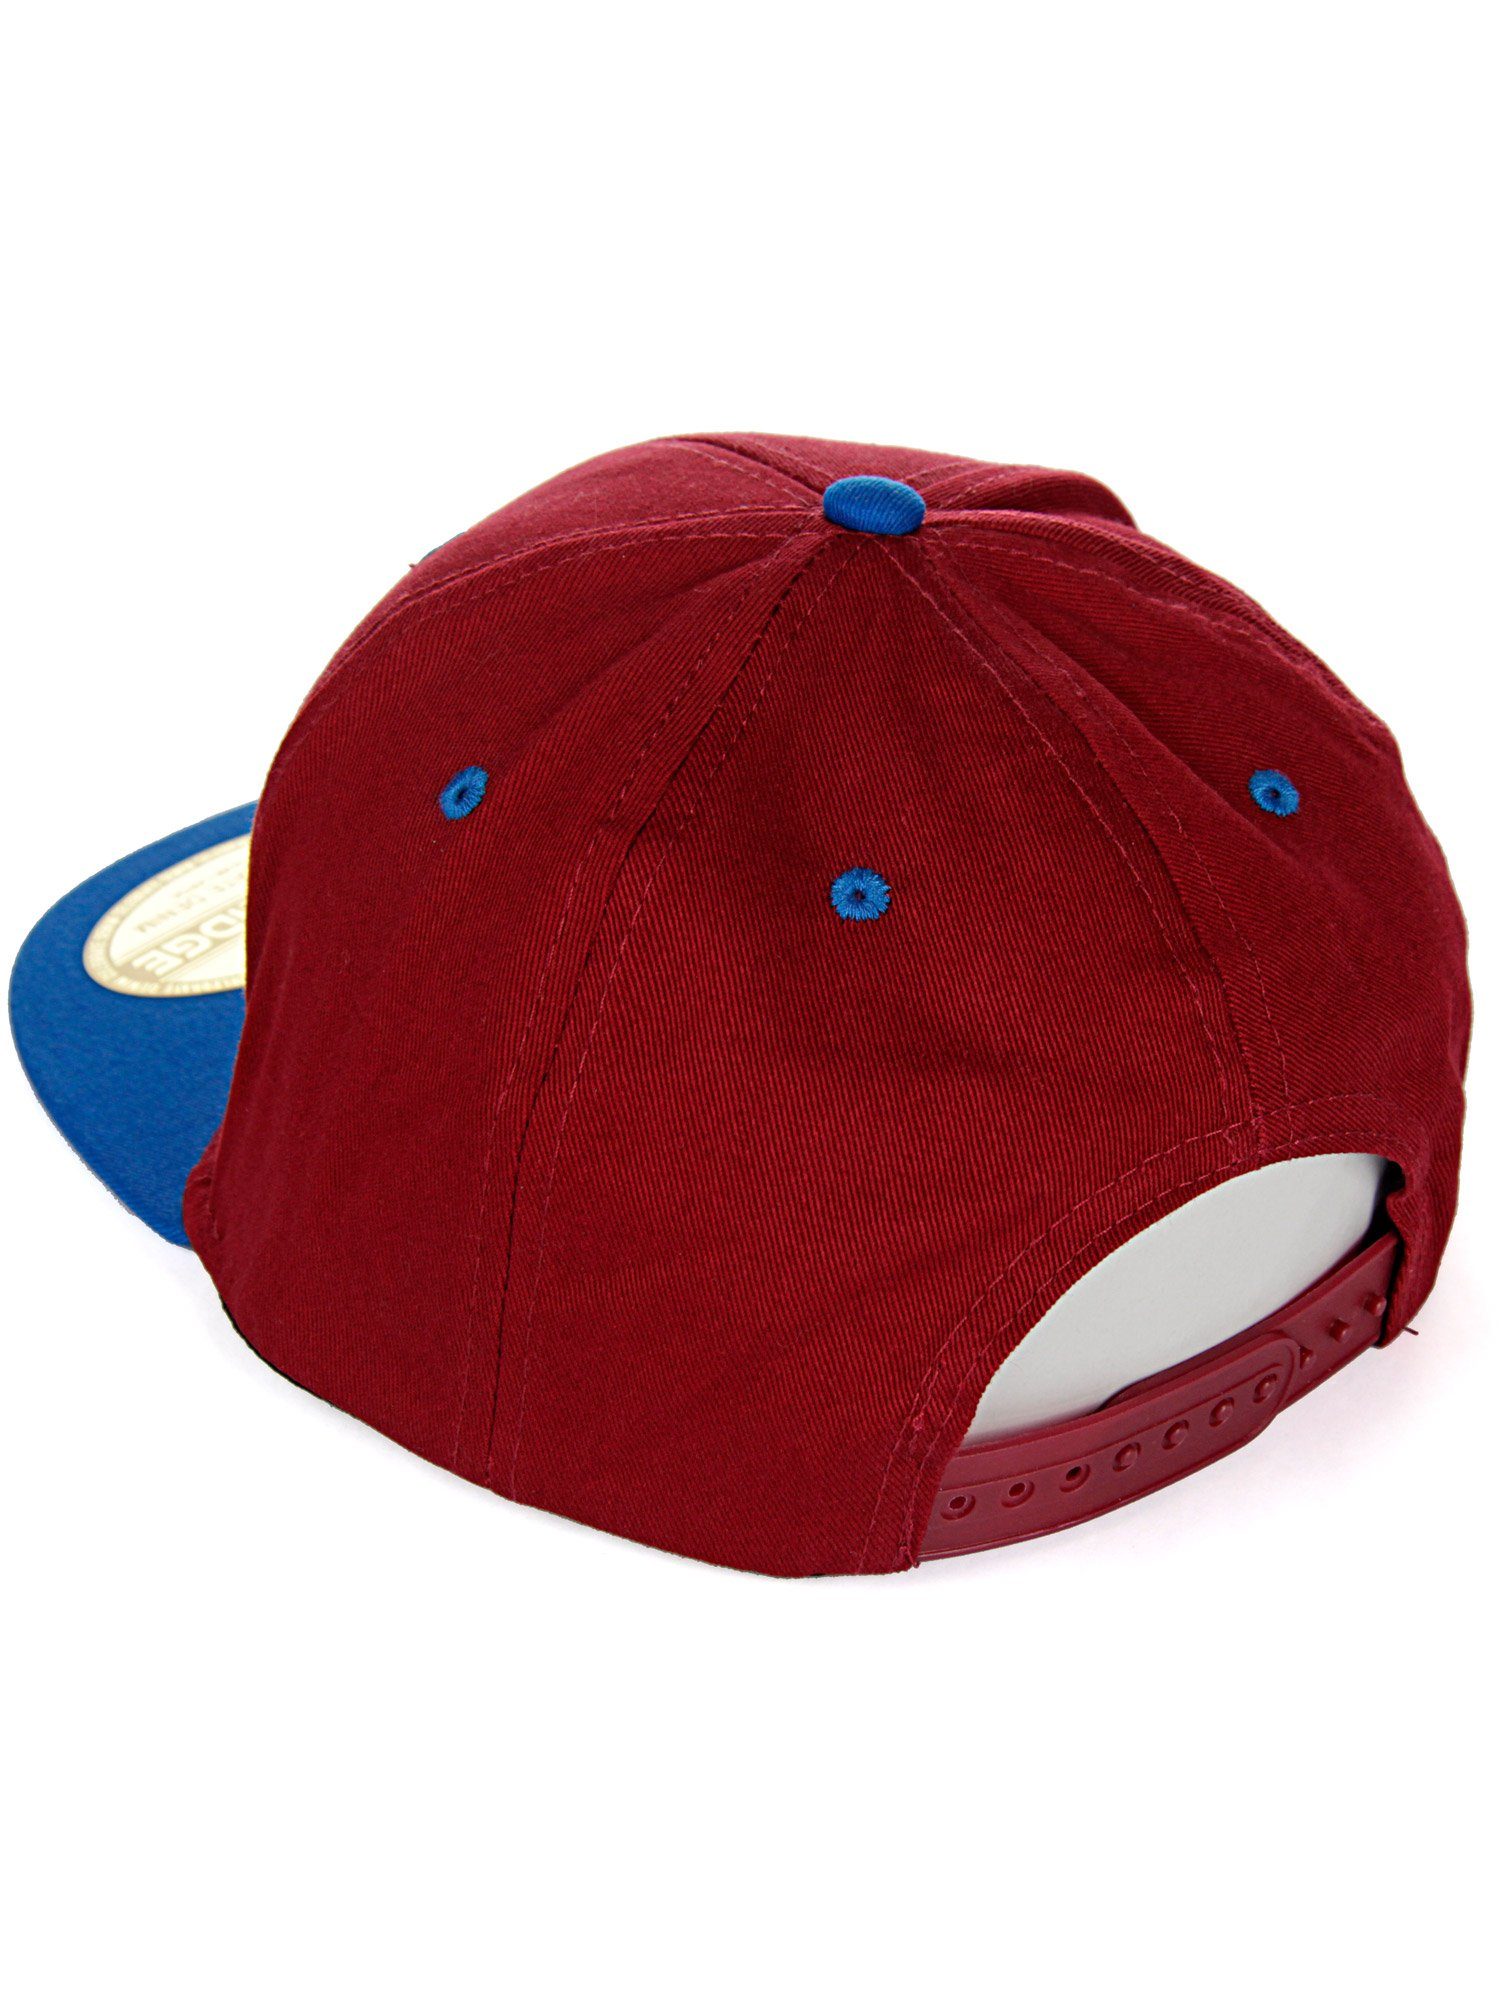 Schirm Lancaster Baseball RedBridge kontrastfarbigem mit Cap blau